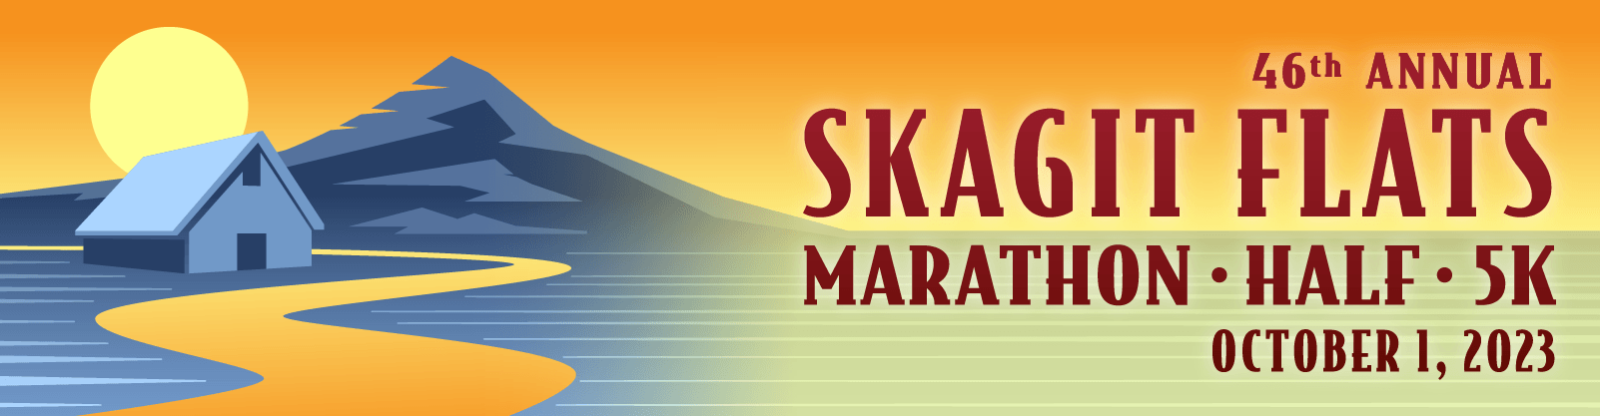 46th Annual Skagit Flats Marathon, Half & 5k